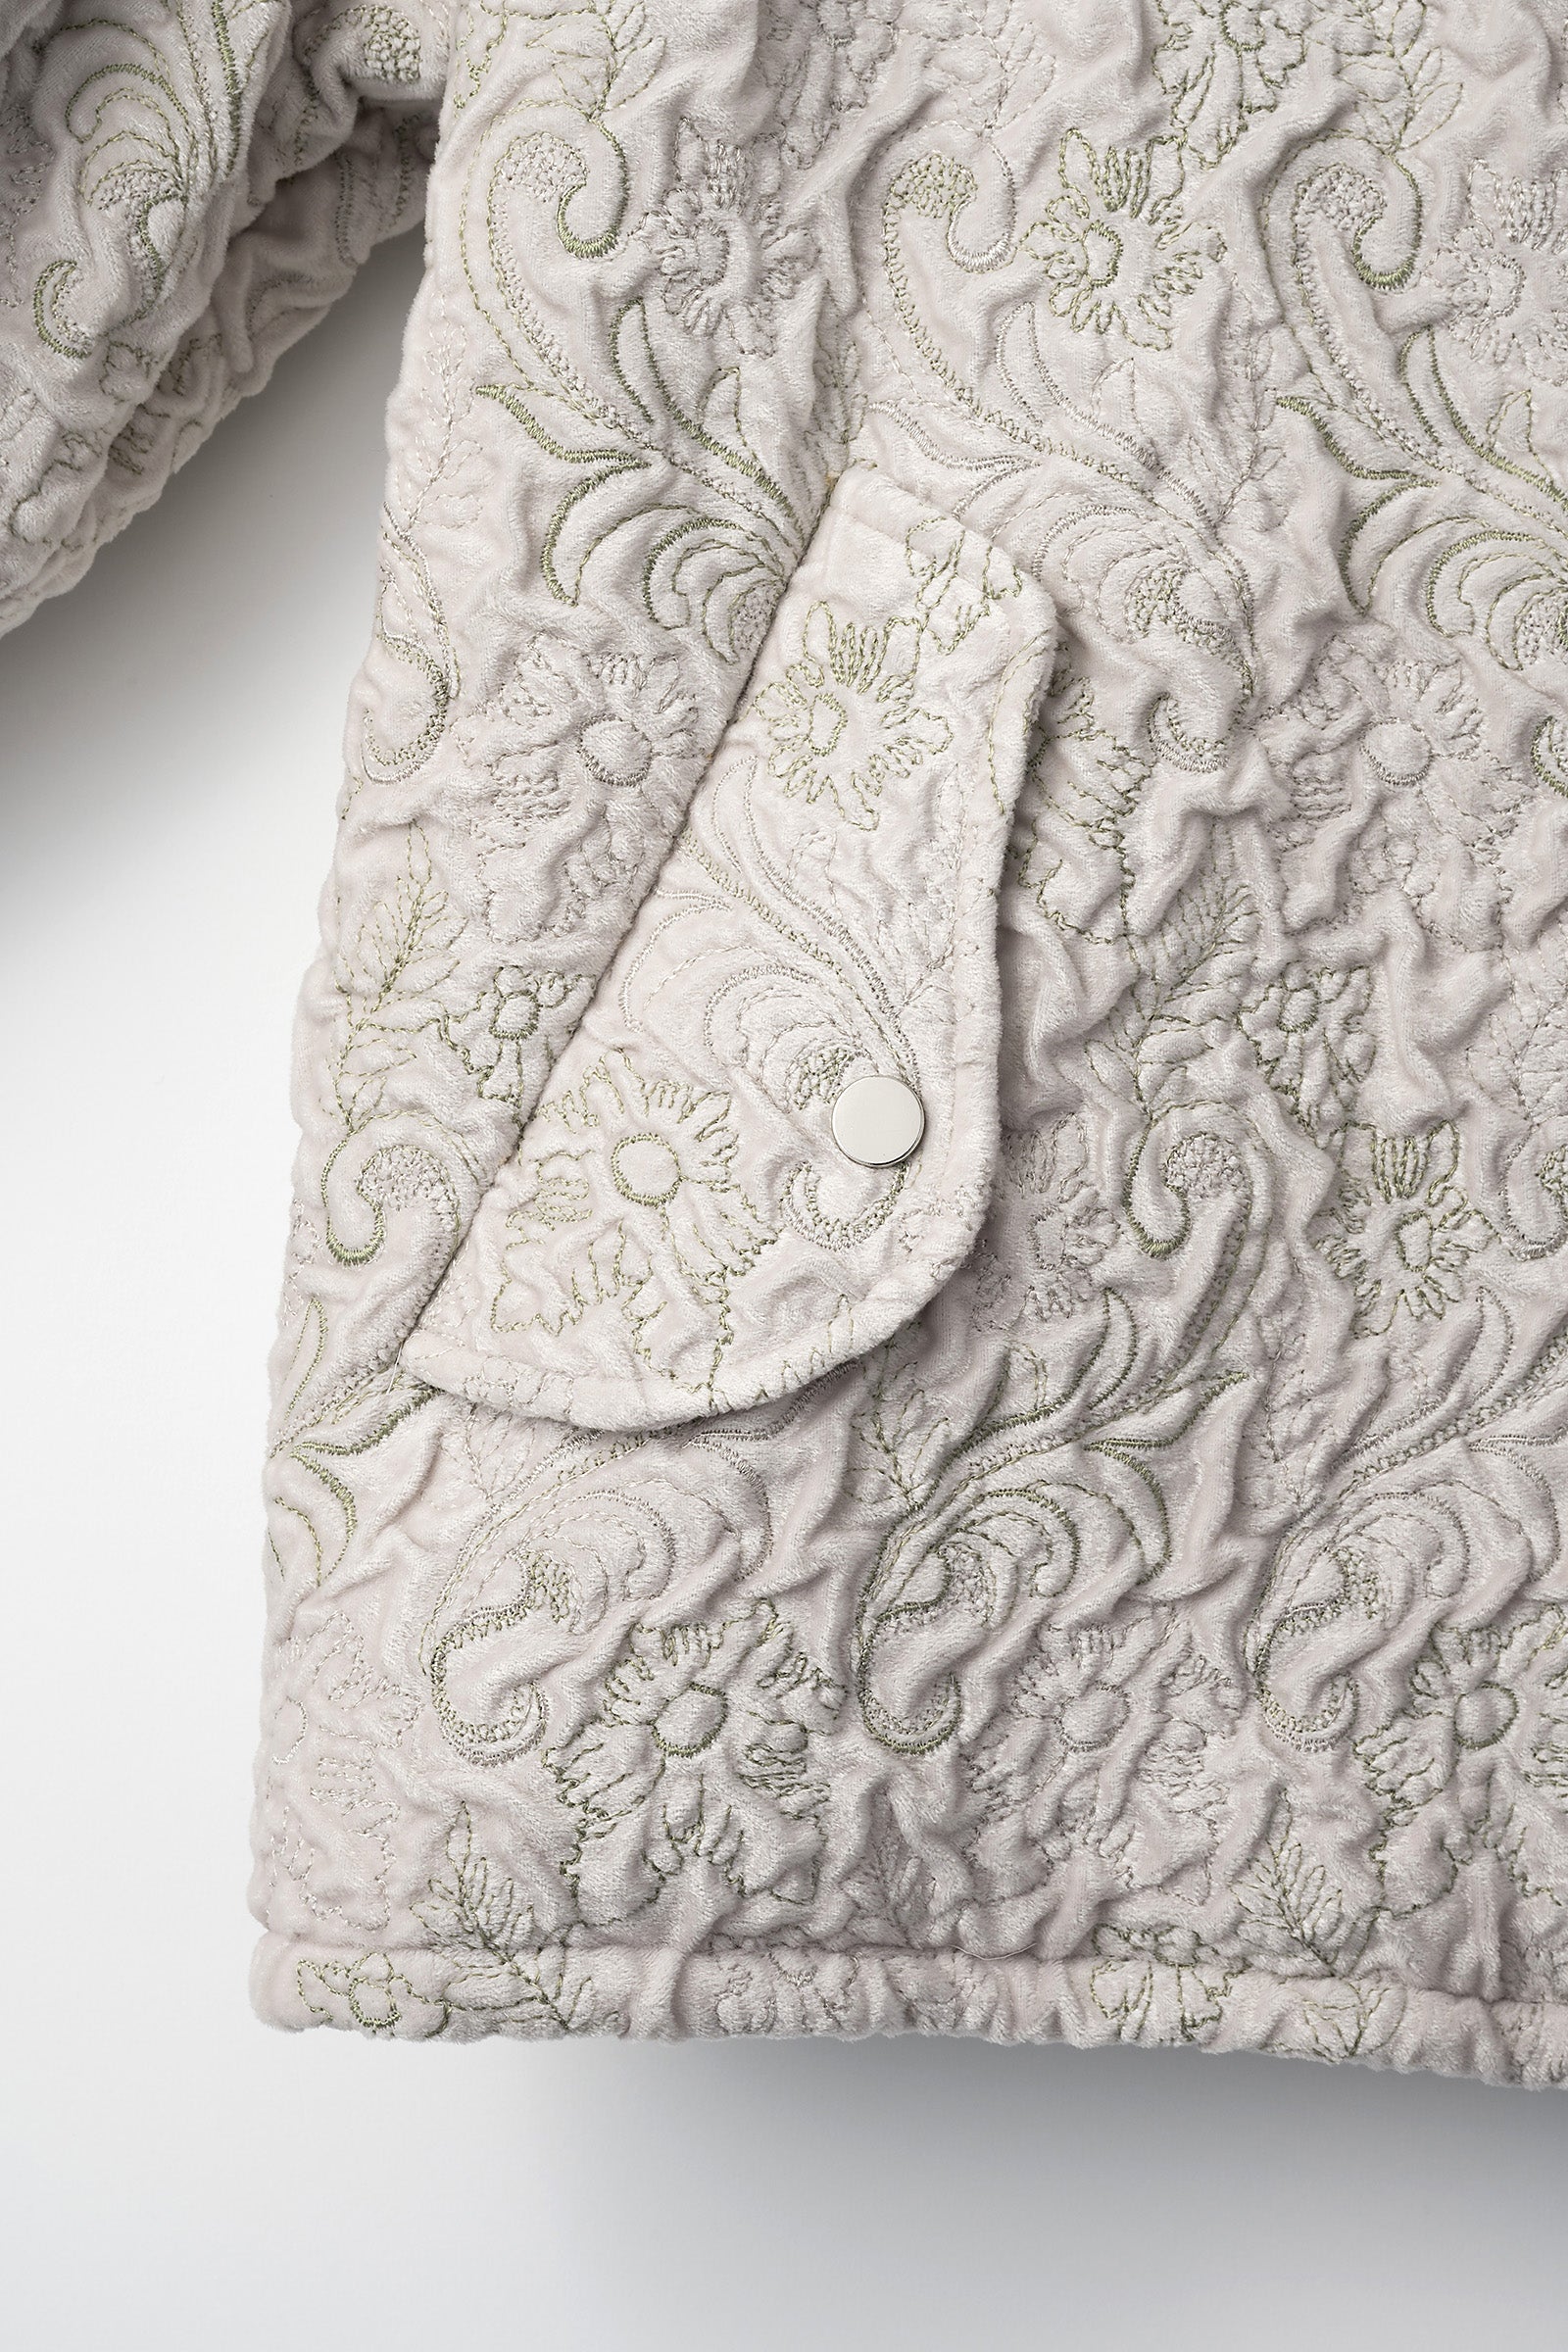 Ice flower embroidery jacket (Ivory)